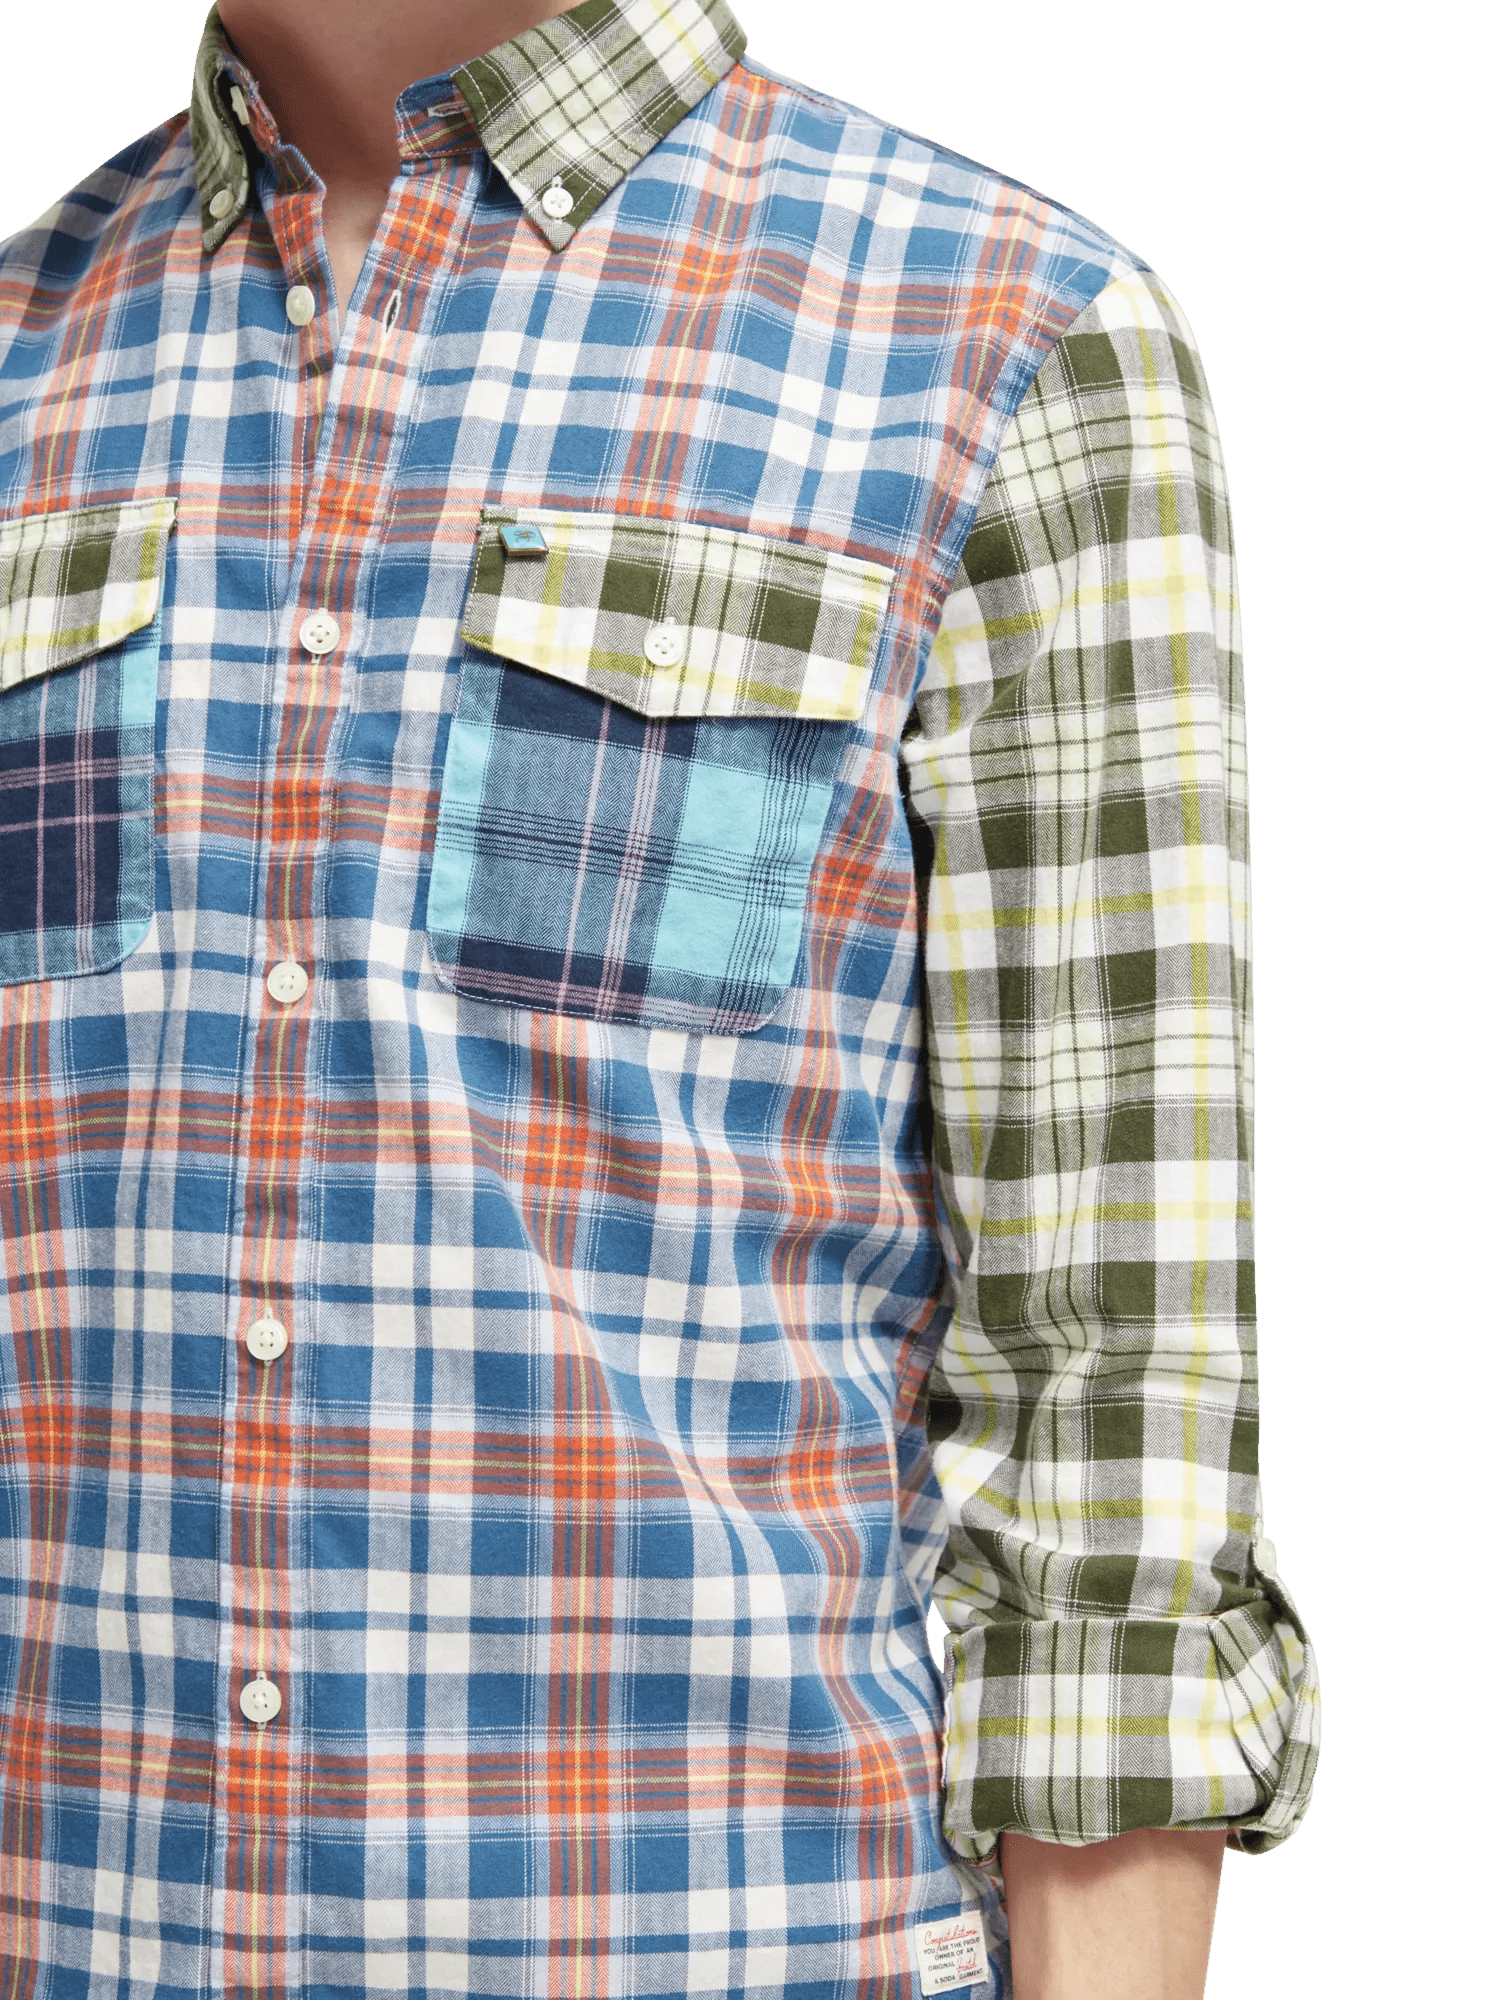 Scotch & Soda - Lightweight Check Flannel Shirt - Multi Check